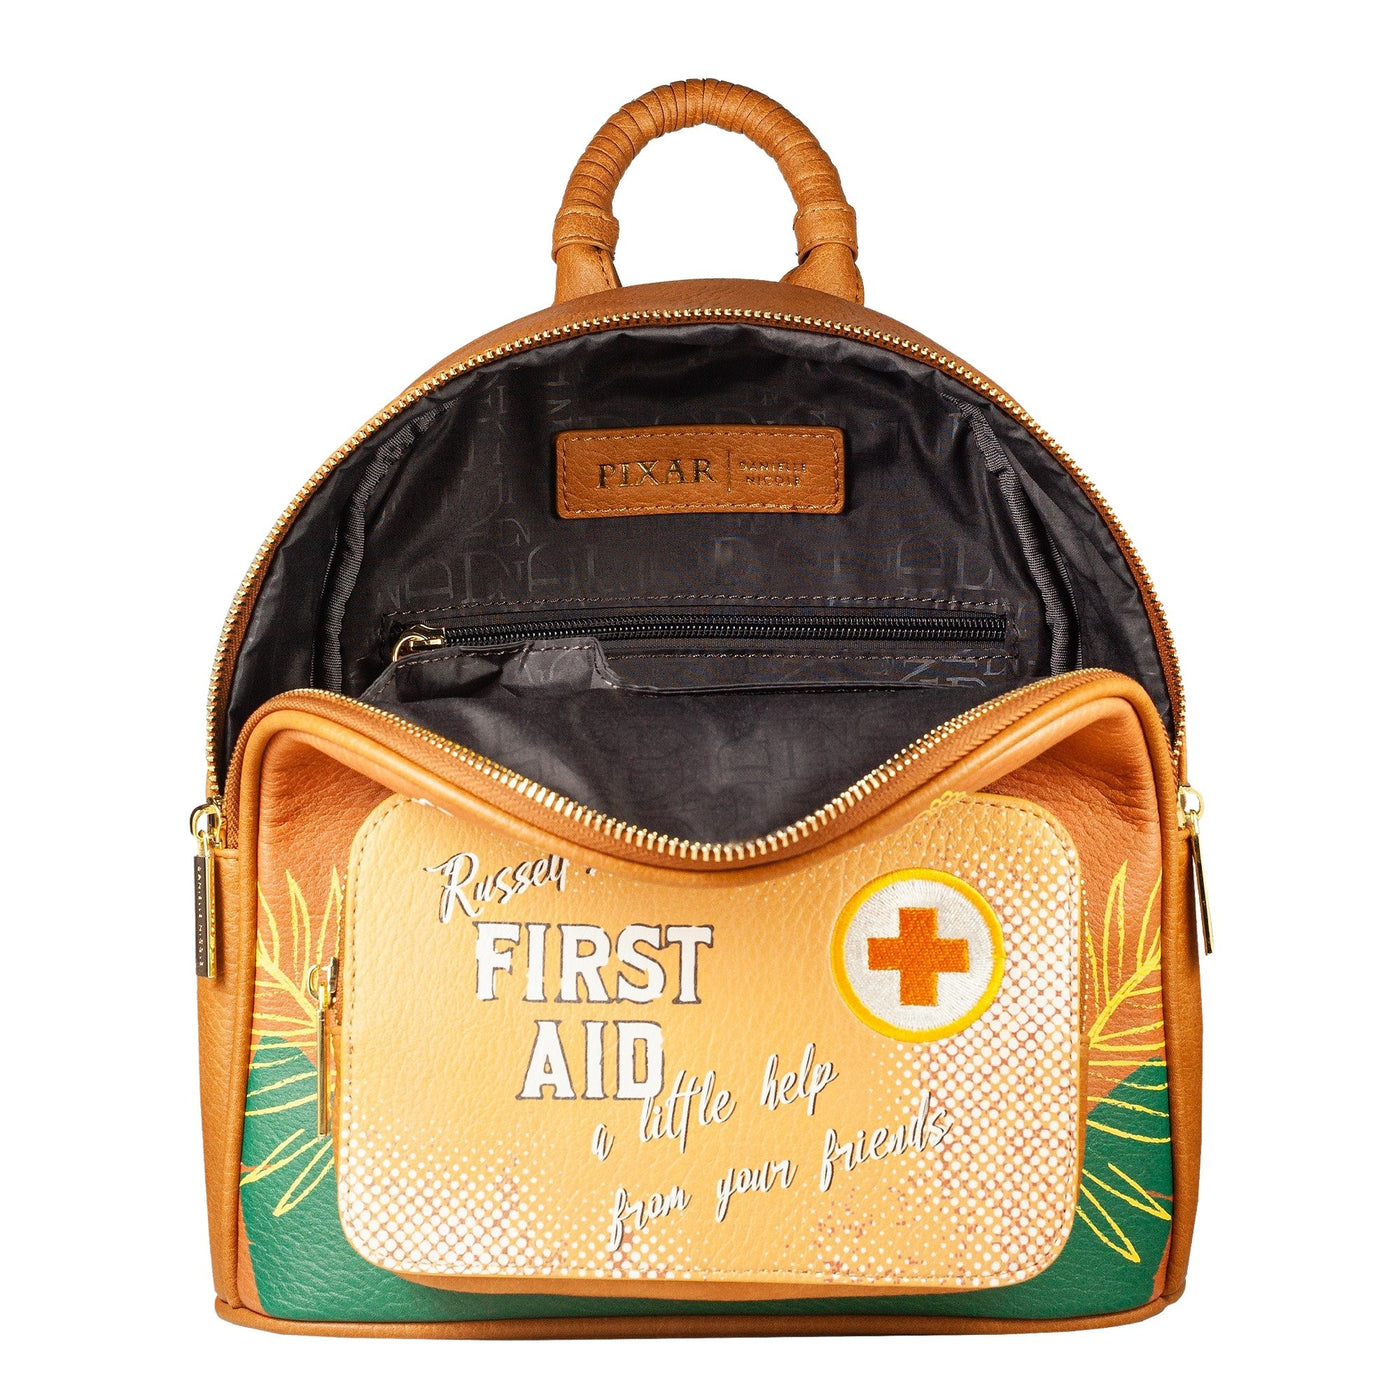 Danielle Nicole Disney Pixar Up First Aid Kit Backpack-LINING